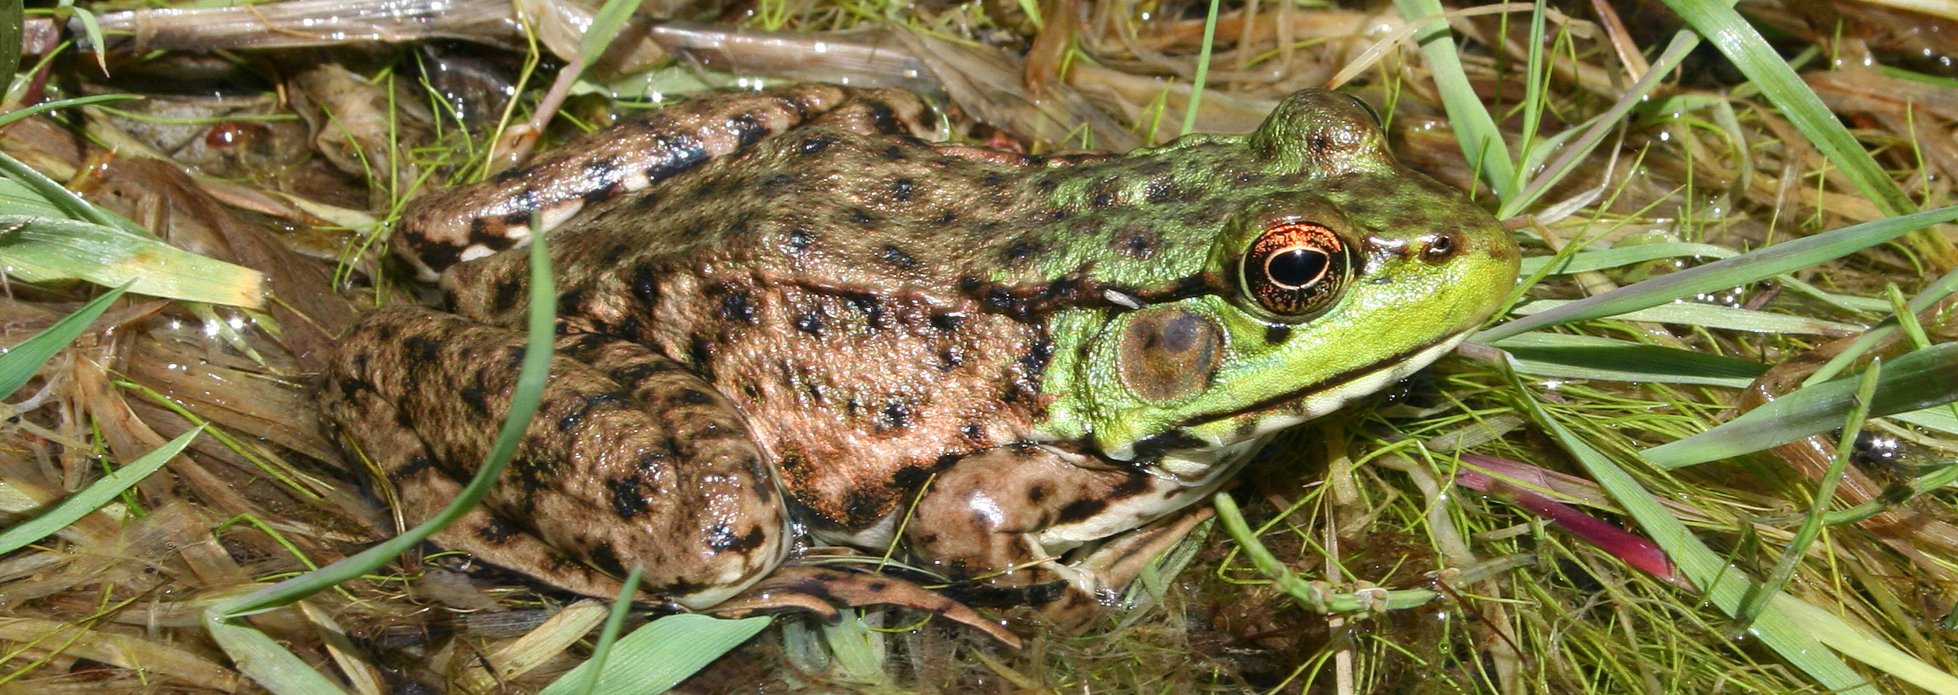 Green Frog, Reptiles & Amphibians in Ontario